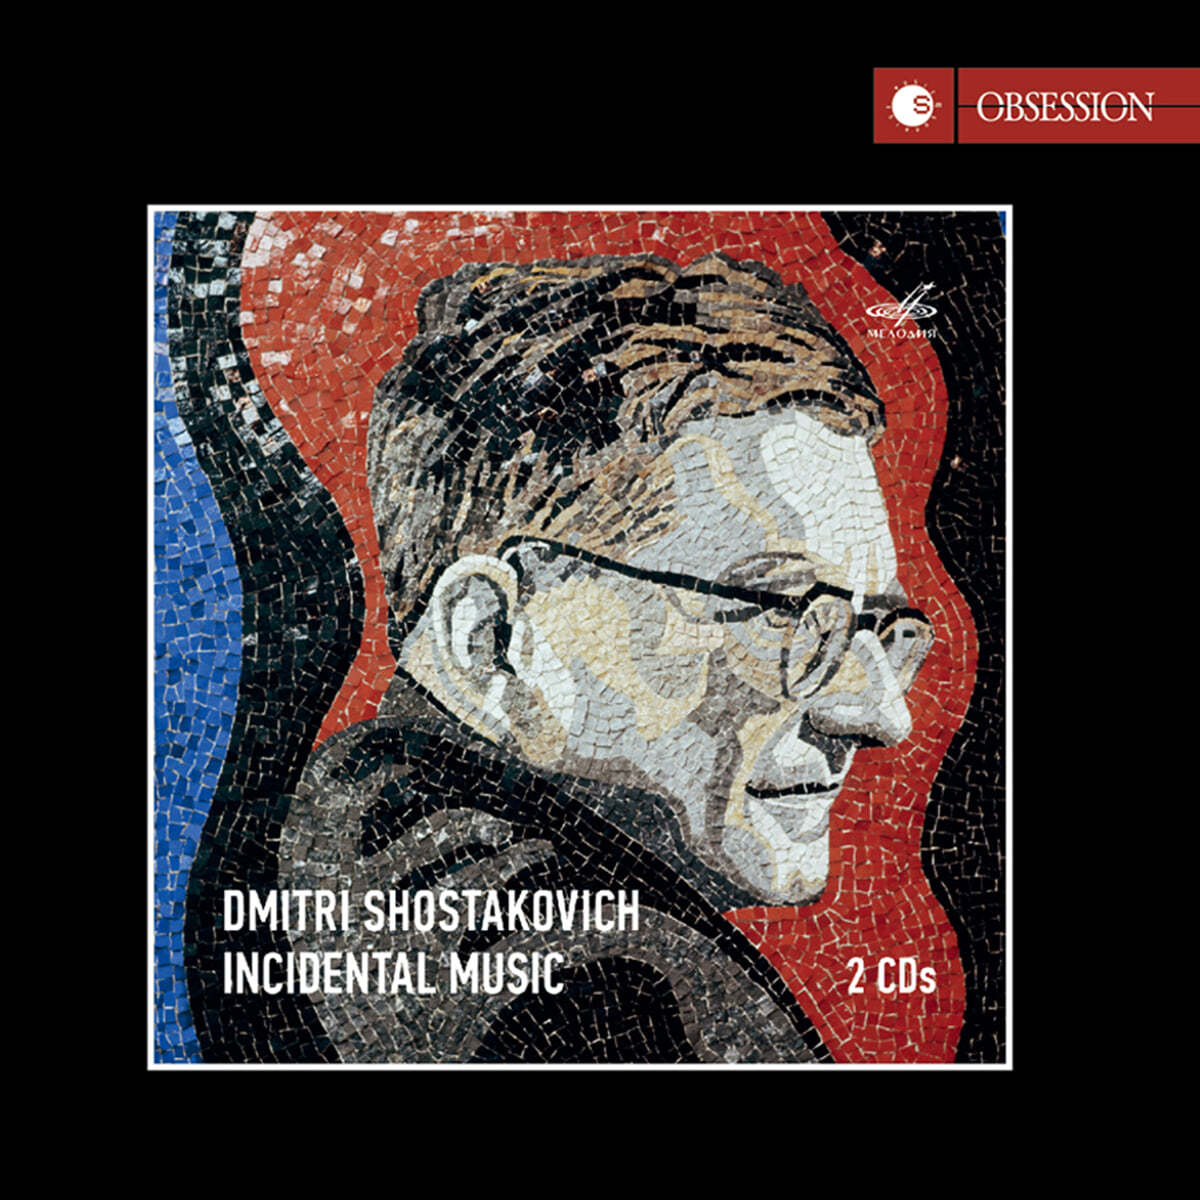 Eduard Serov / Emin Khachaturian 쇼스타코비치: 연극, 영화 모음집 (Shostakovich Inccidental Music)